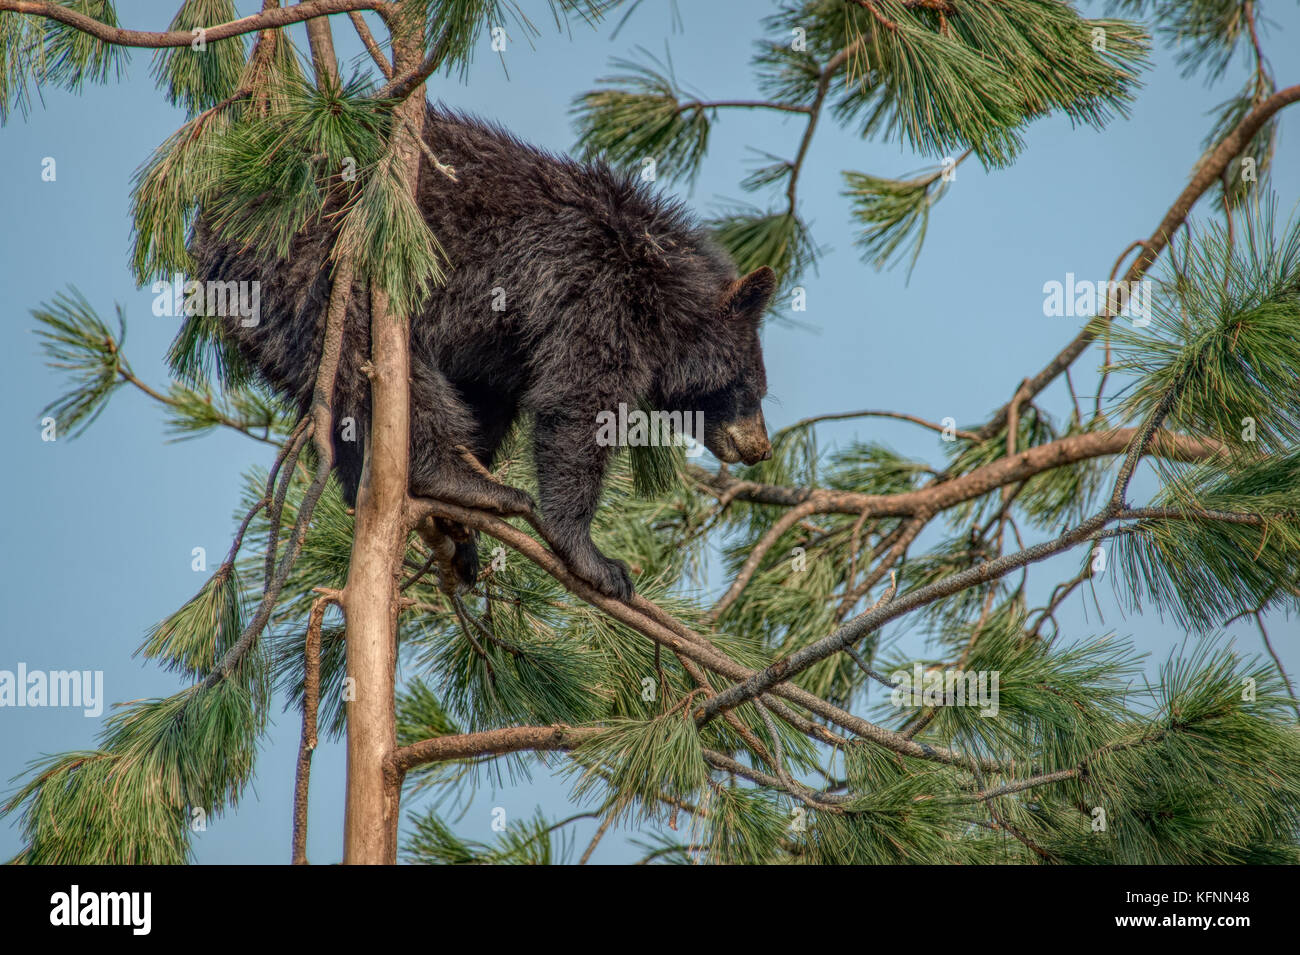 A black bear cub climbing in tree Stock Photo